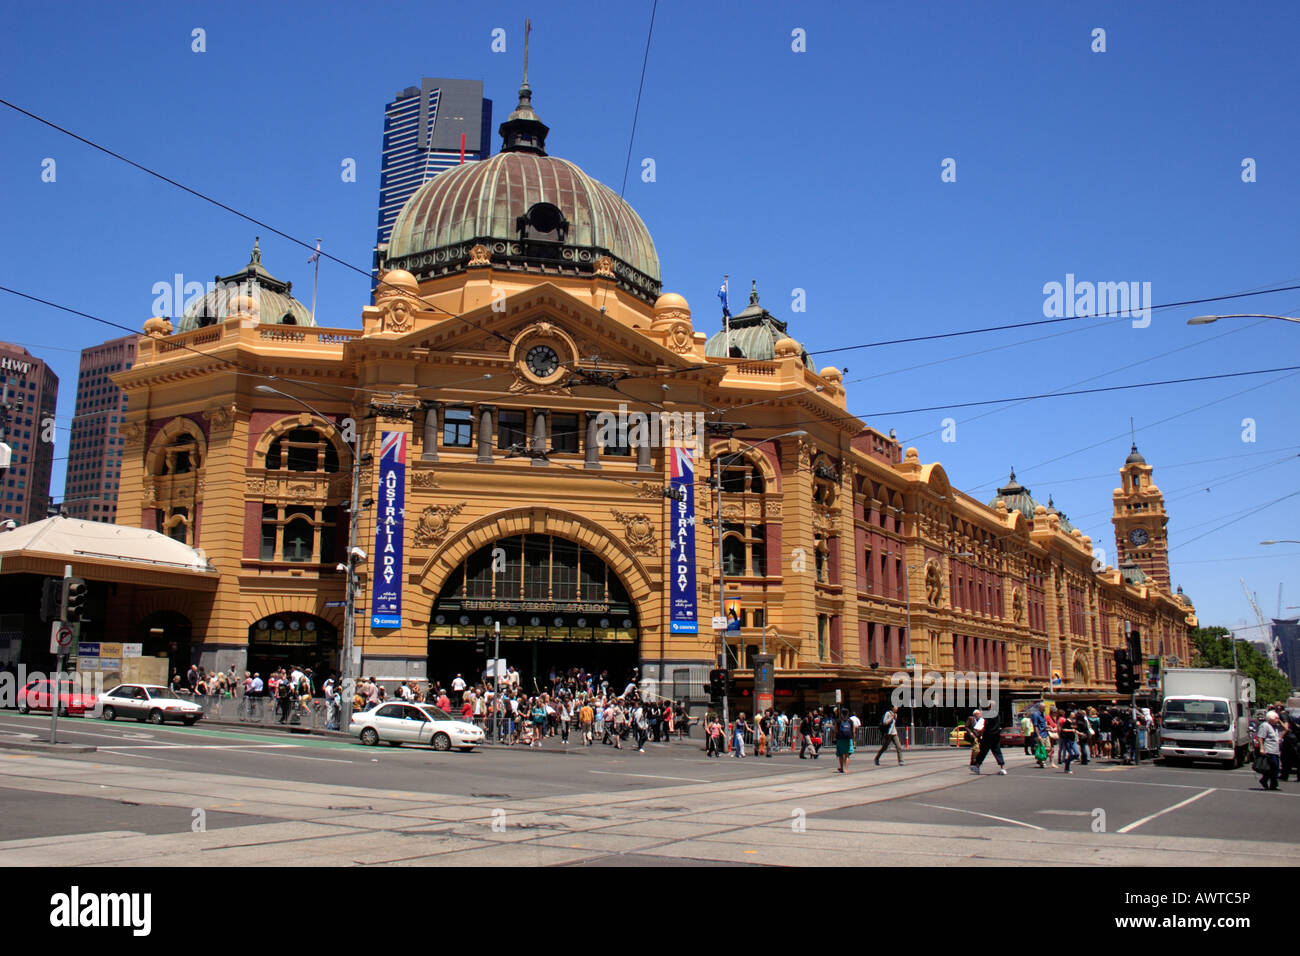 La gare Flinders Melbourne Australie Stree Banque D'Images